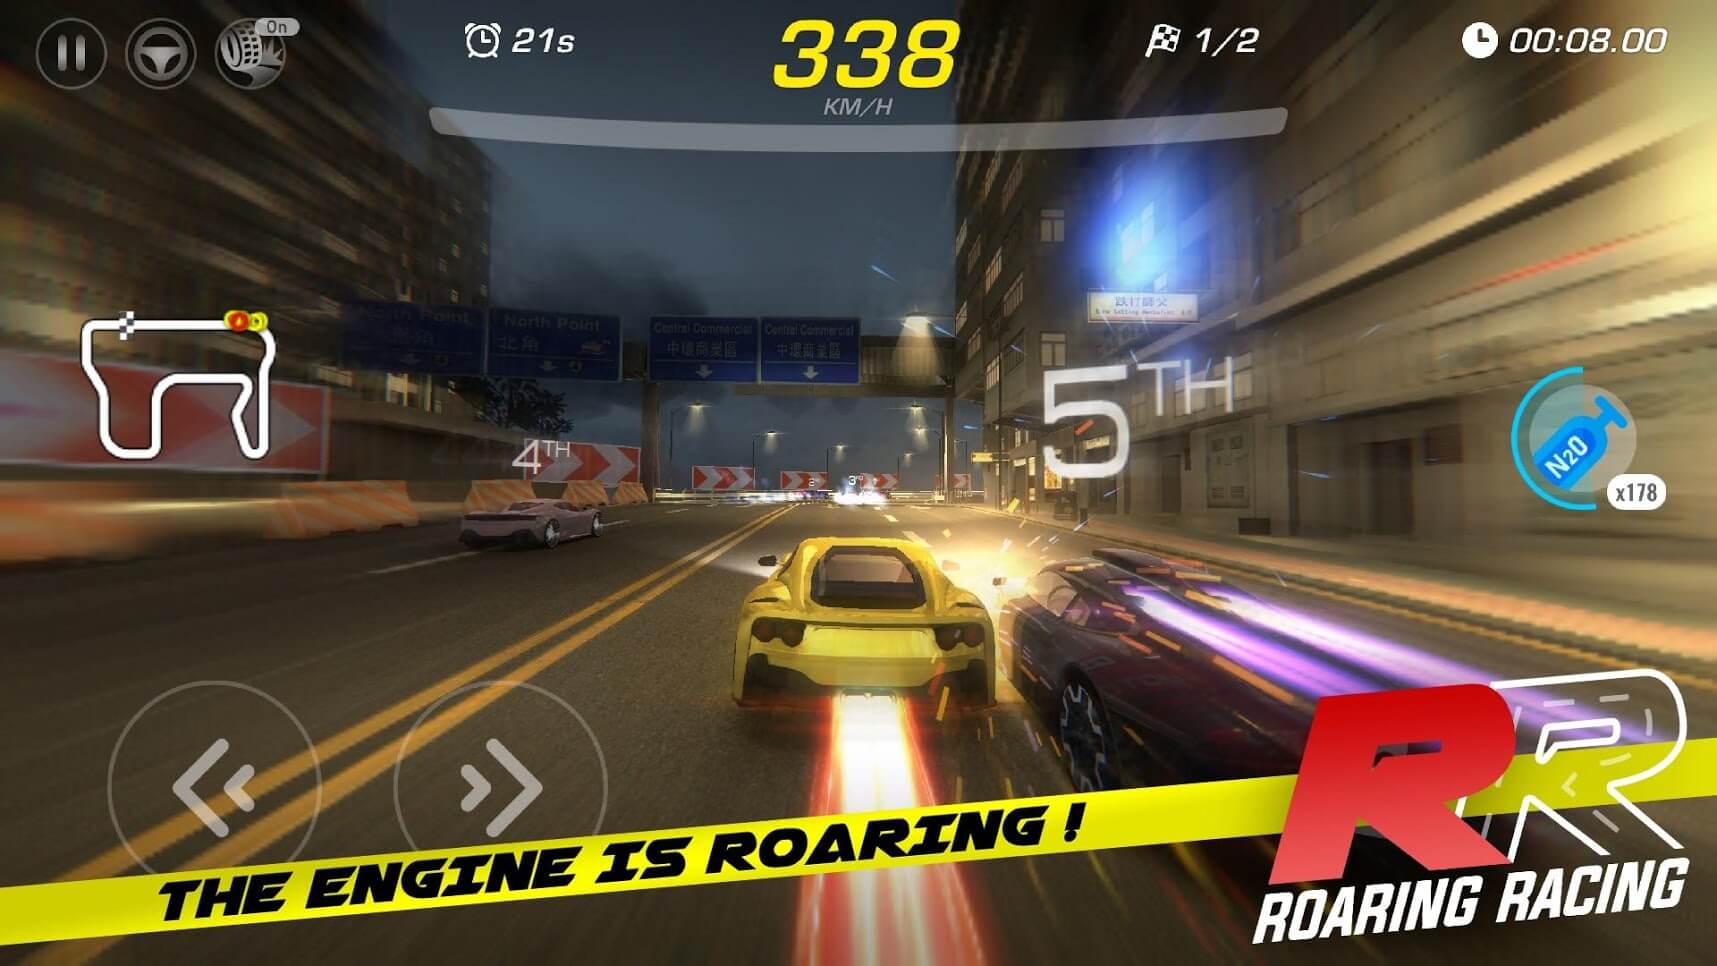 Roaring-Racing-2.jpg